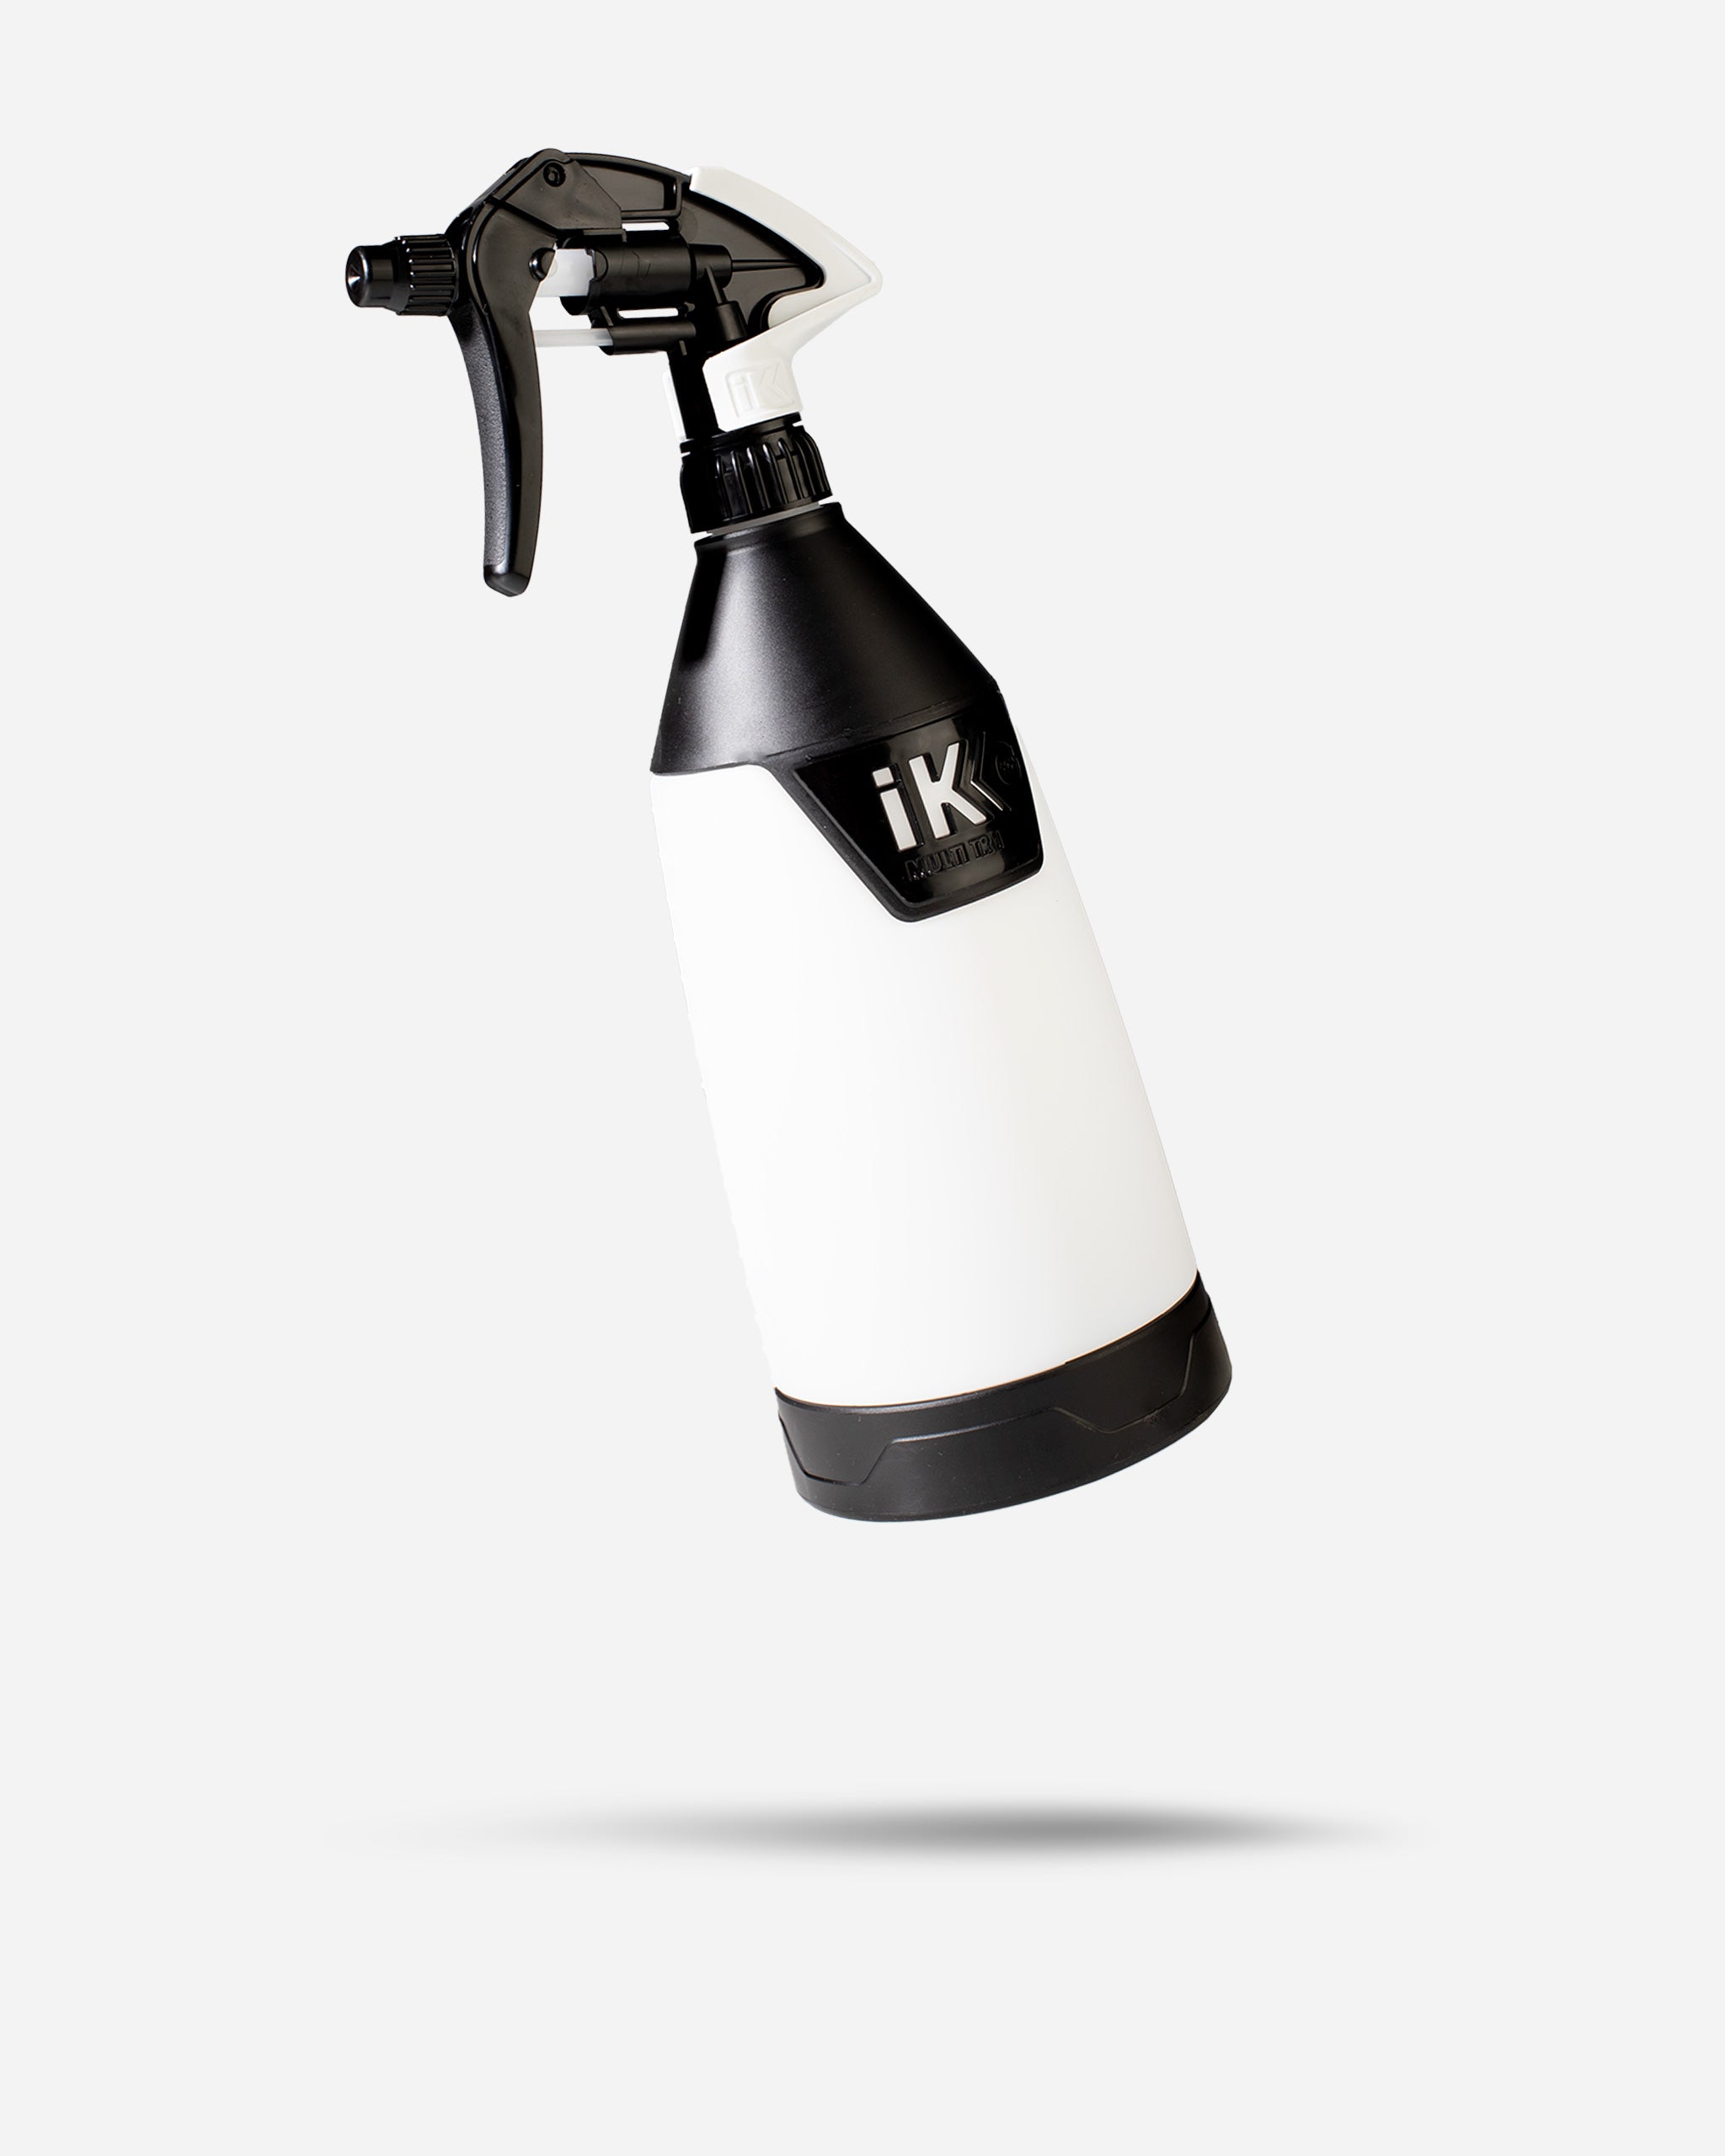 IK HC TR 1 Replacement Trigger Sprayer